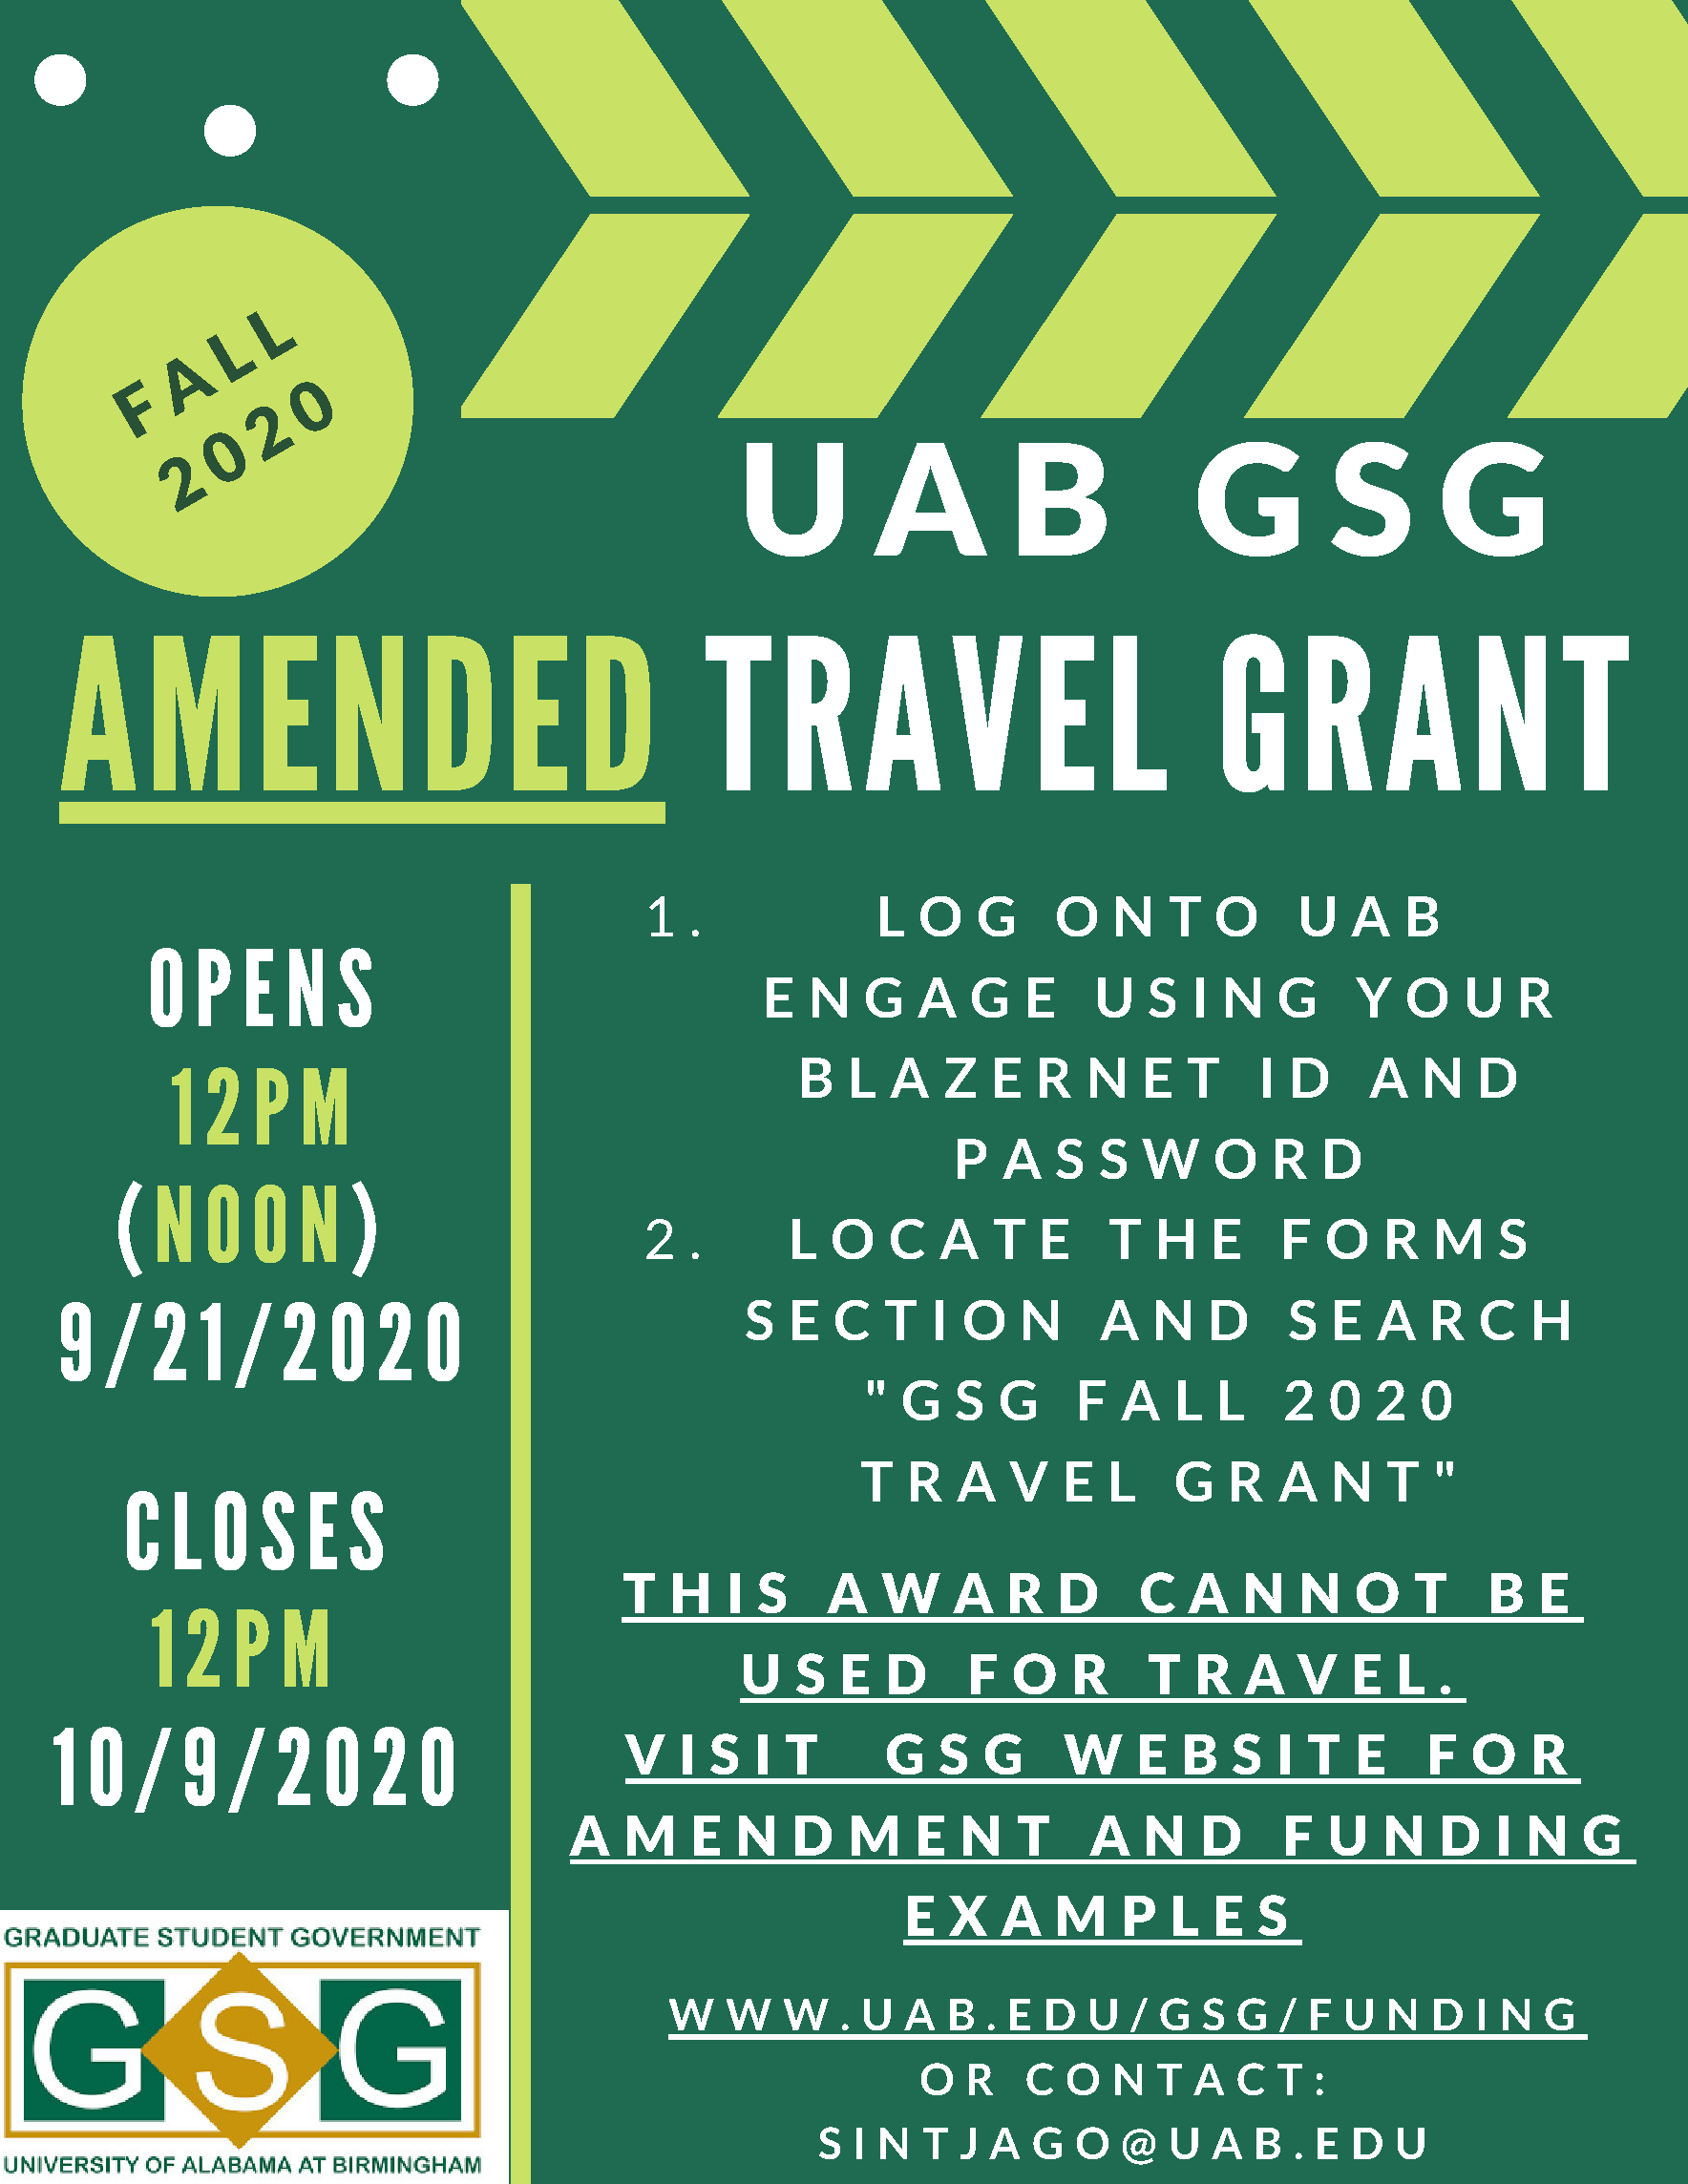 phd student travel grants